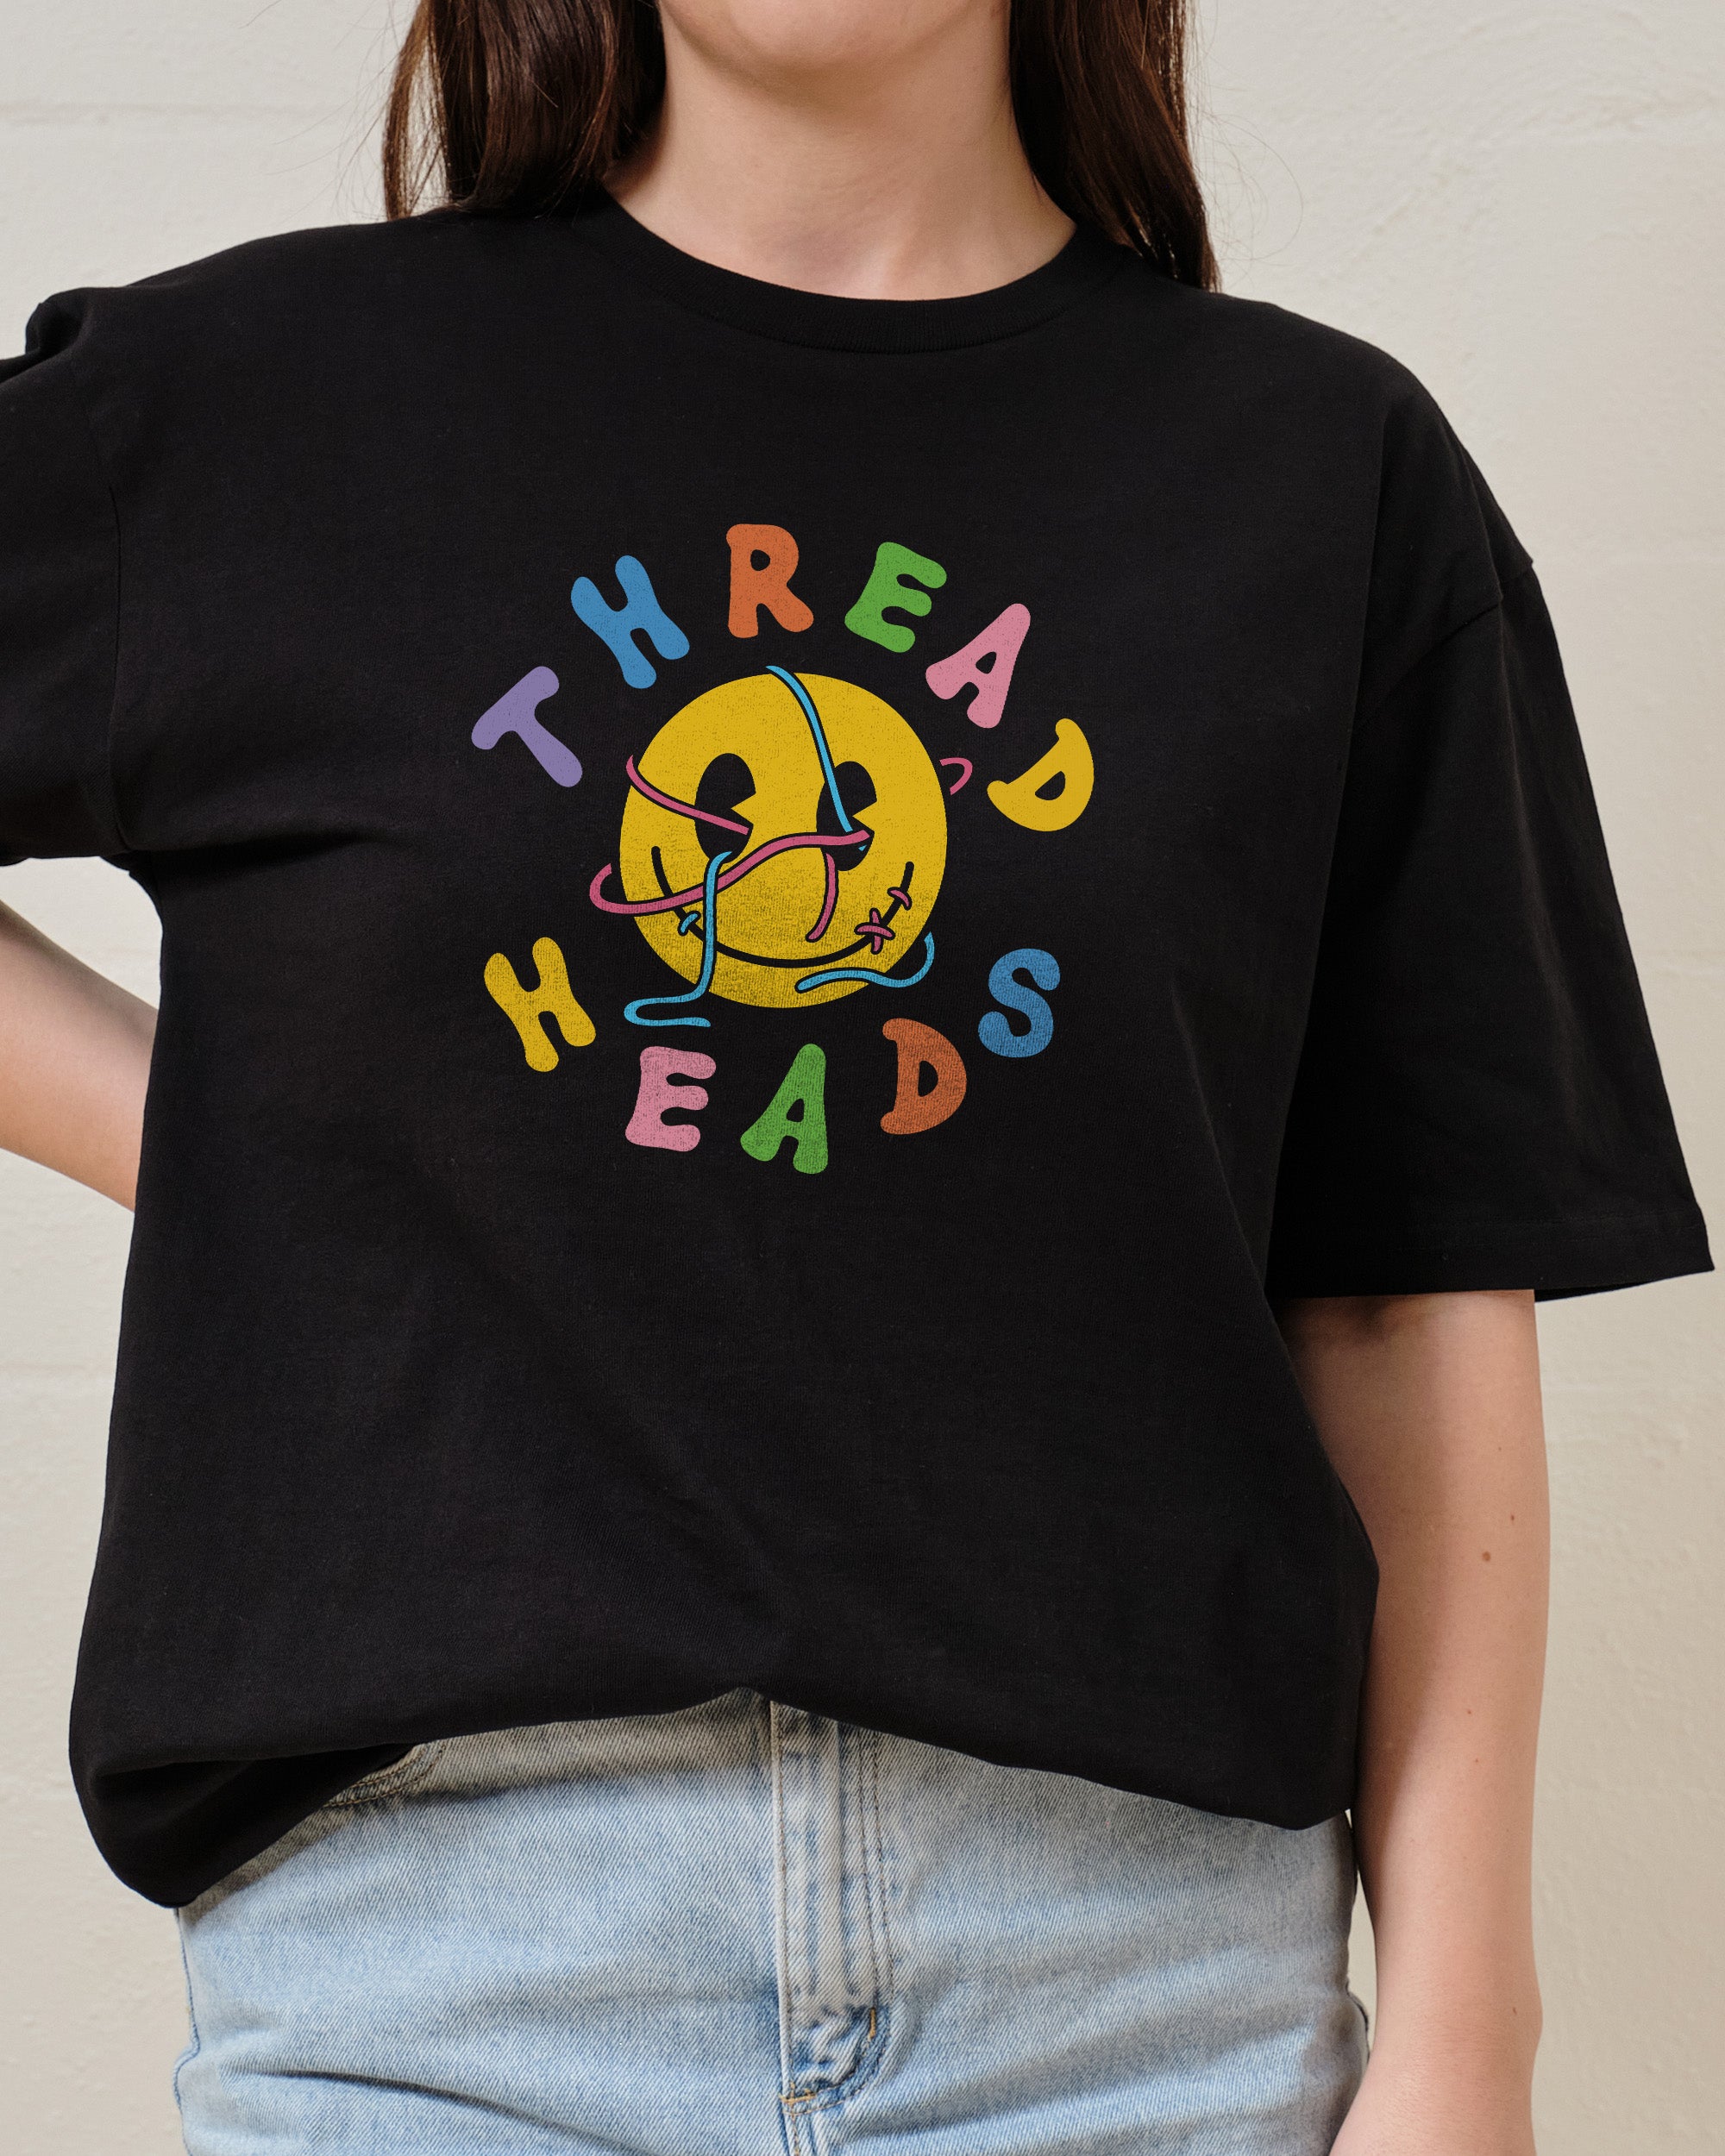 Thread Heads T-Shirt Australia Online